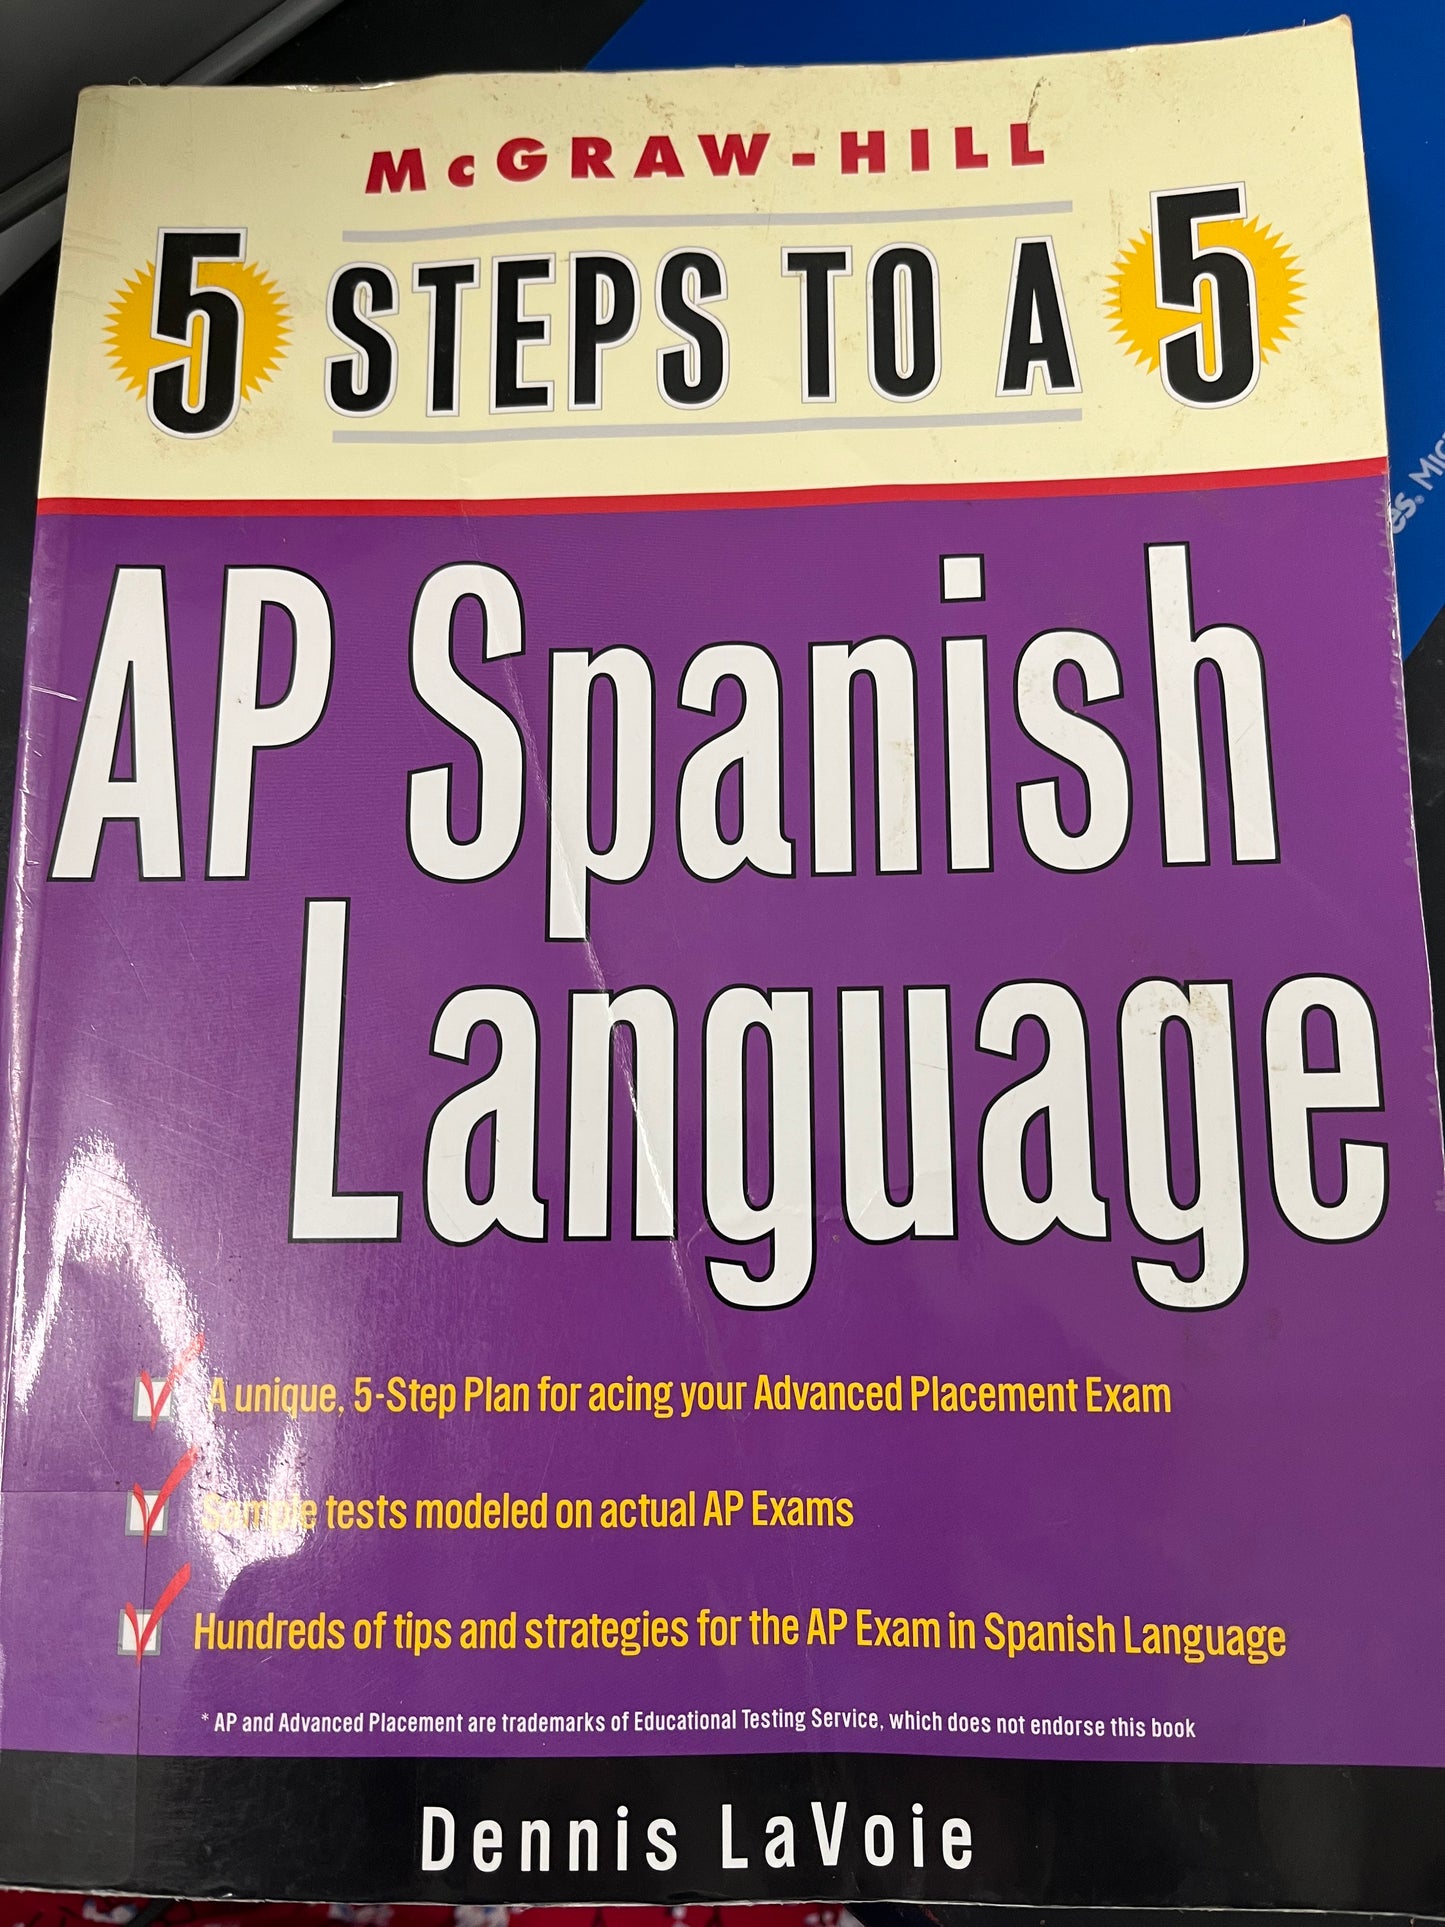 5 Steps to a 5 - AP Spanish Language